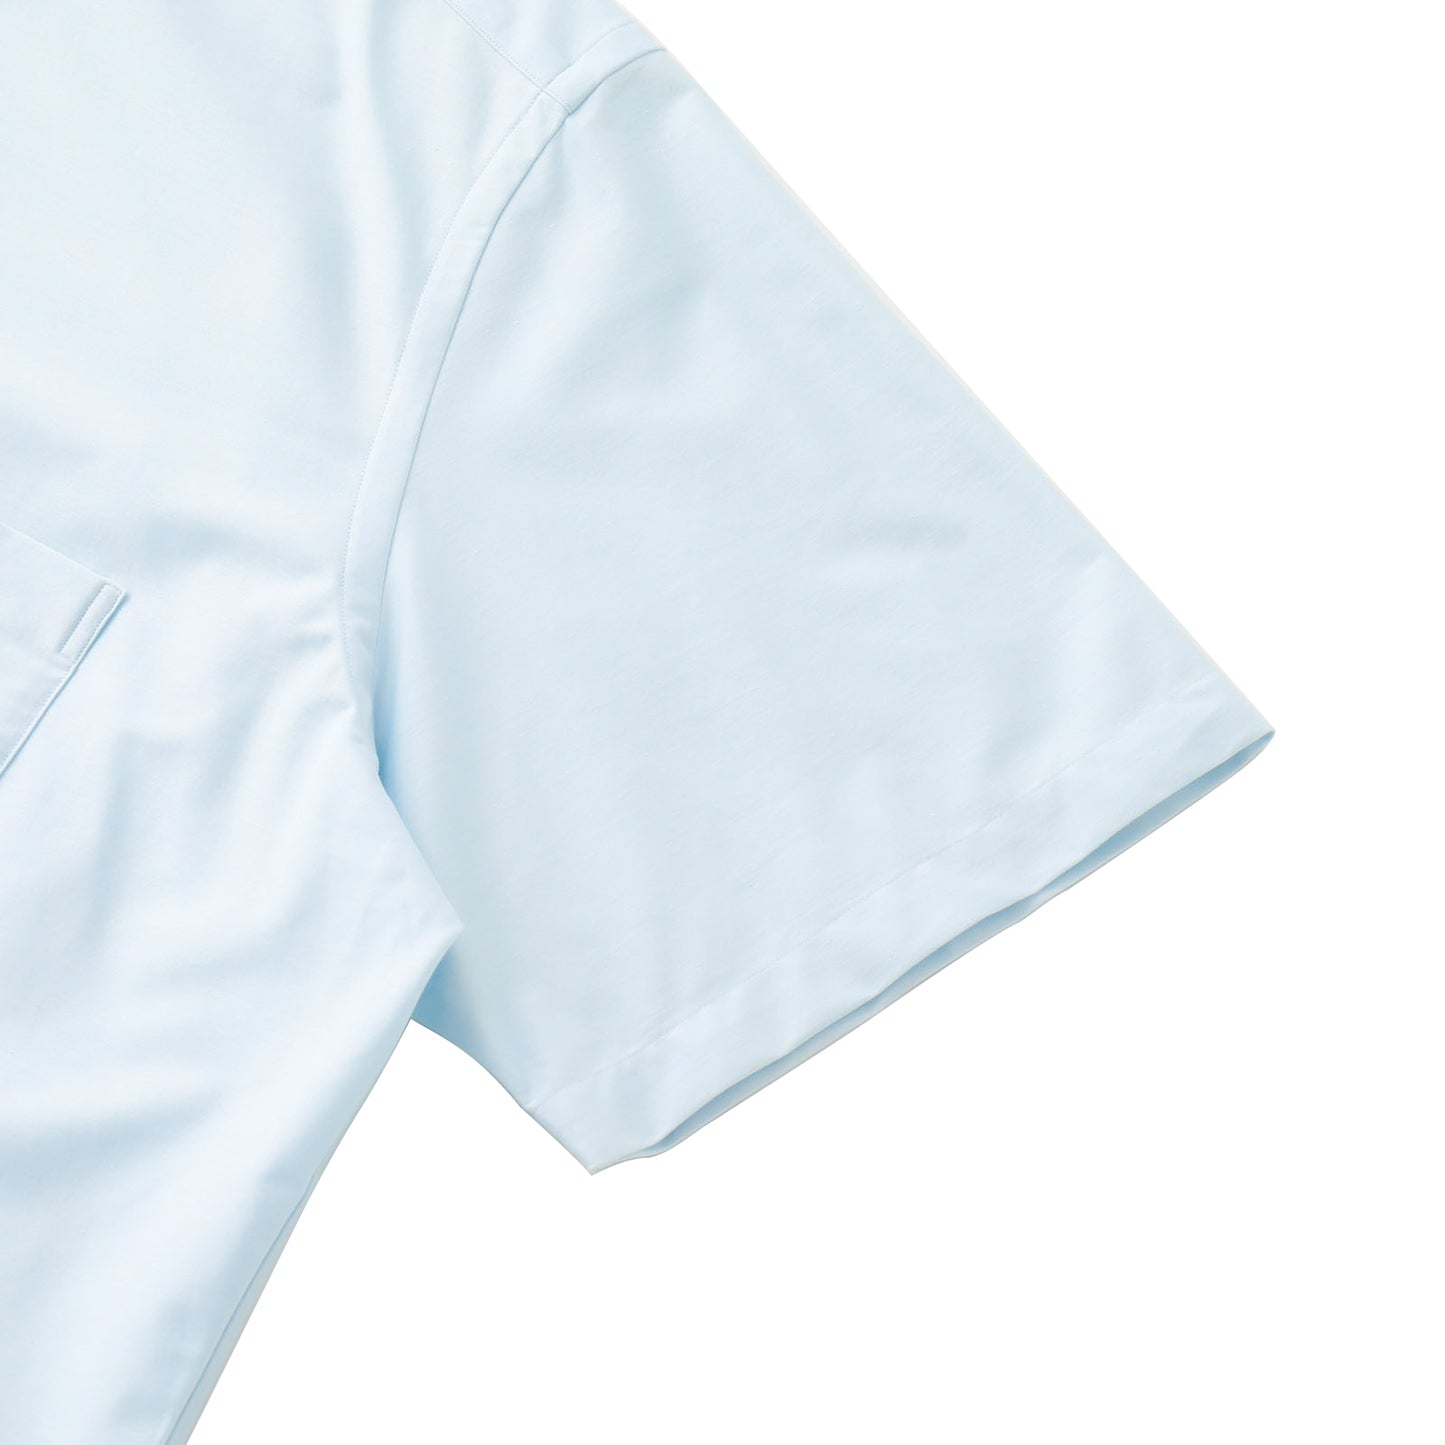 【10% OFF】KANEMASA PHIL.｜46G Atmosphere SS Shirt (SAX)